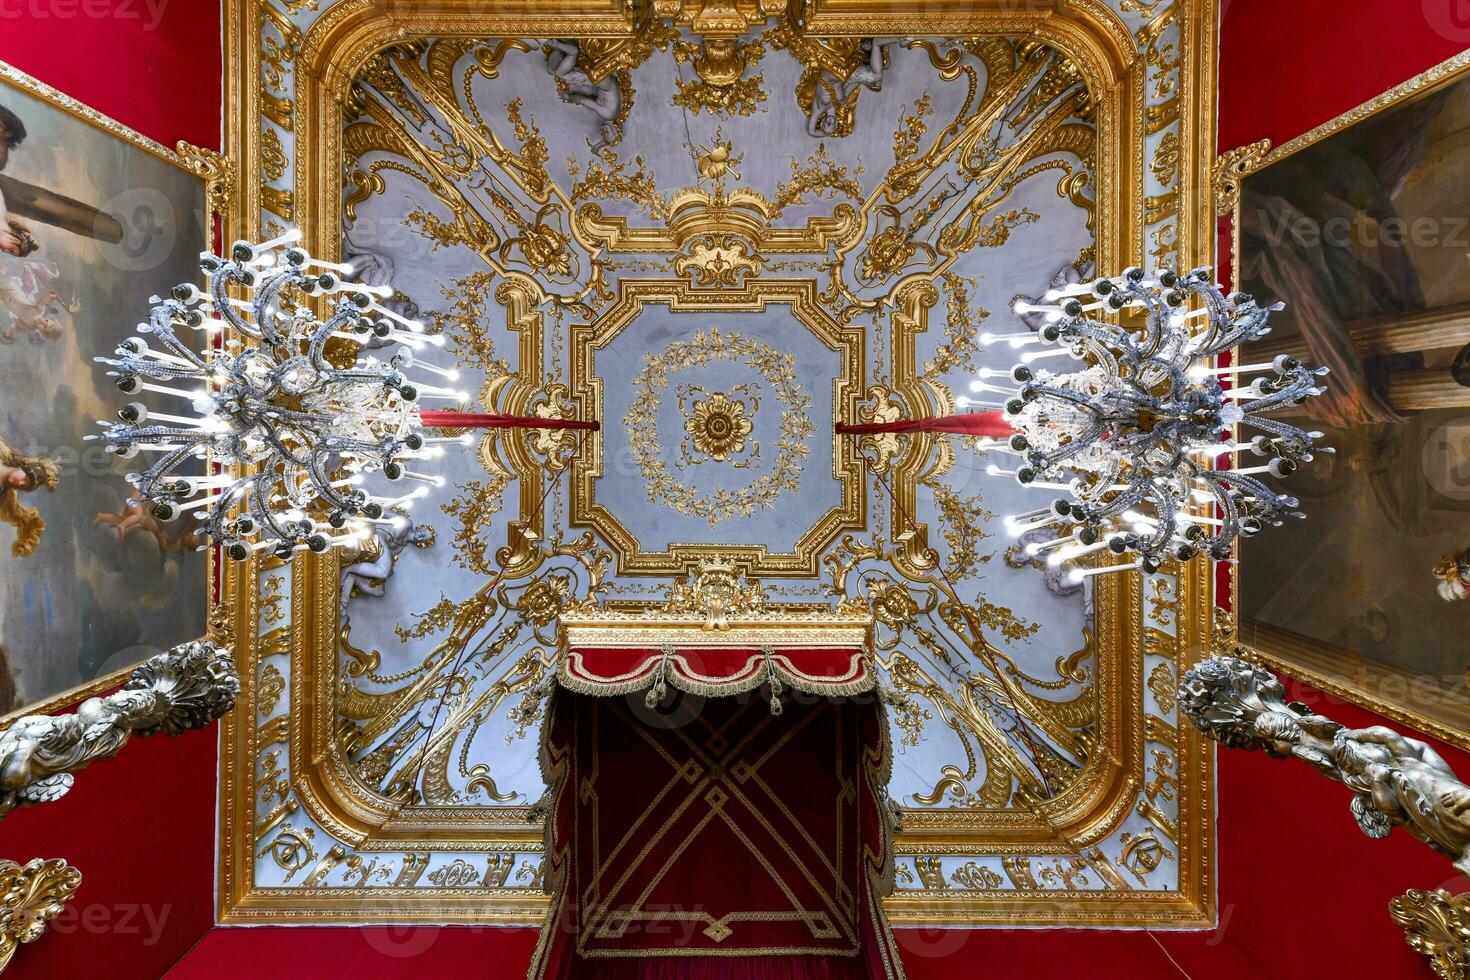 palais réel - Gênes, Italie photo